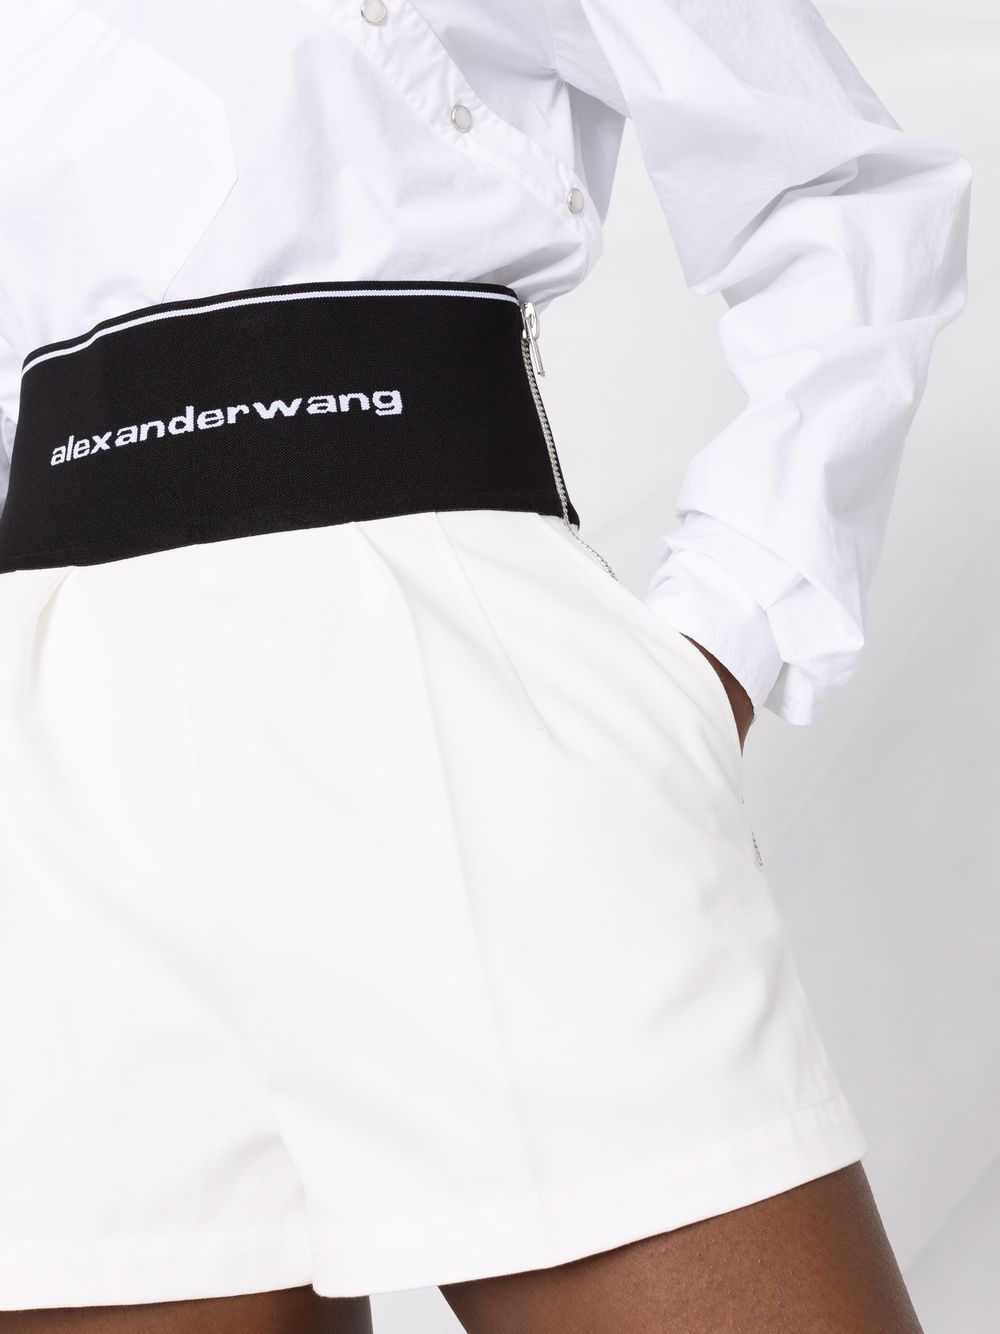 Pantaloncini con stampa in bianco - donna ALEXANDER WANG | 1WC1224450110